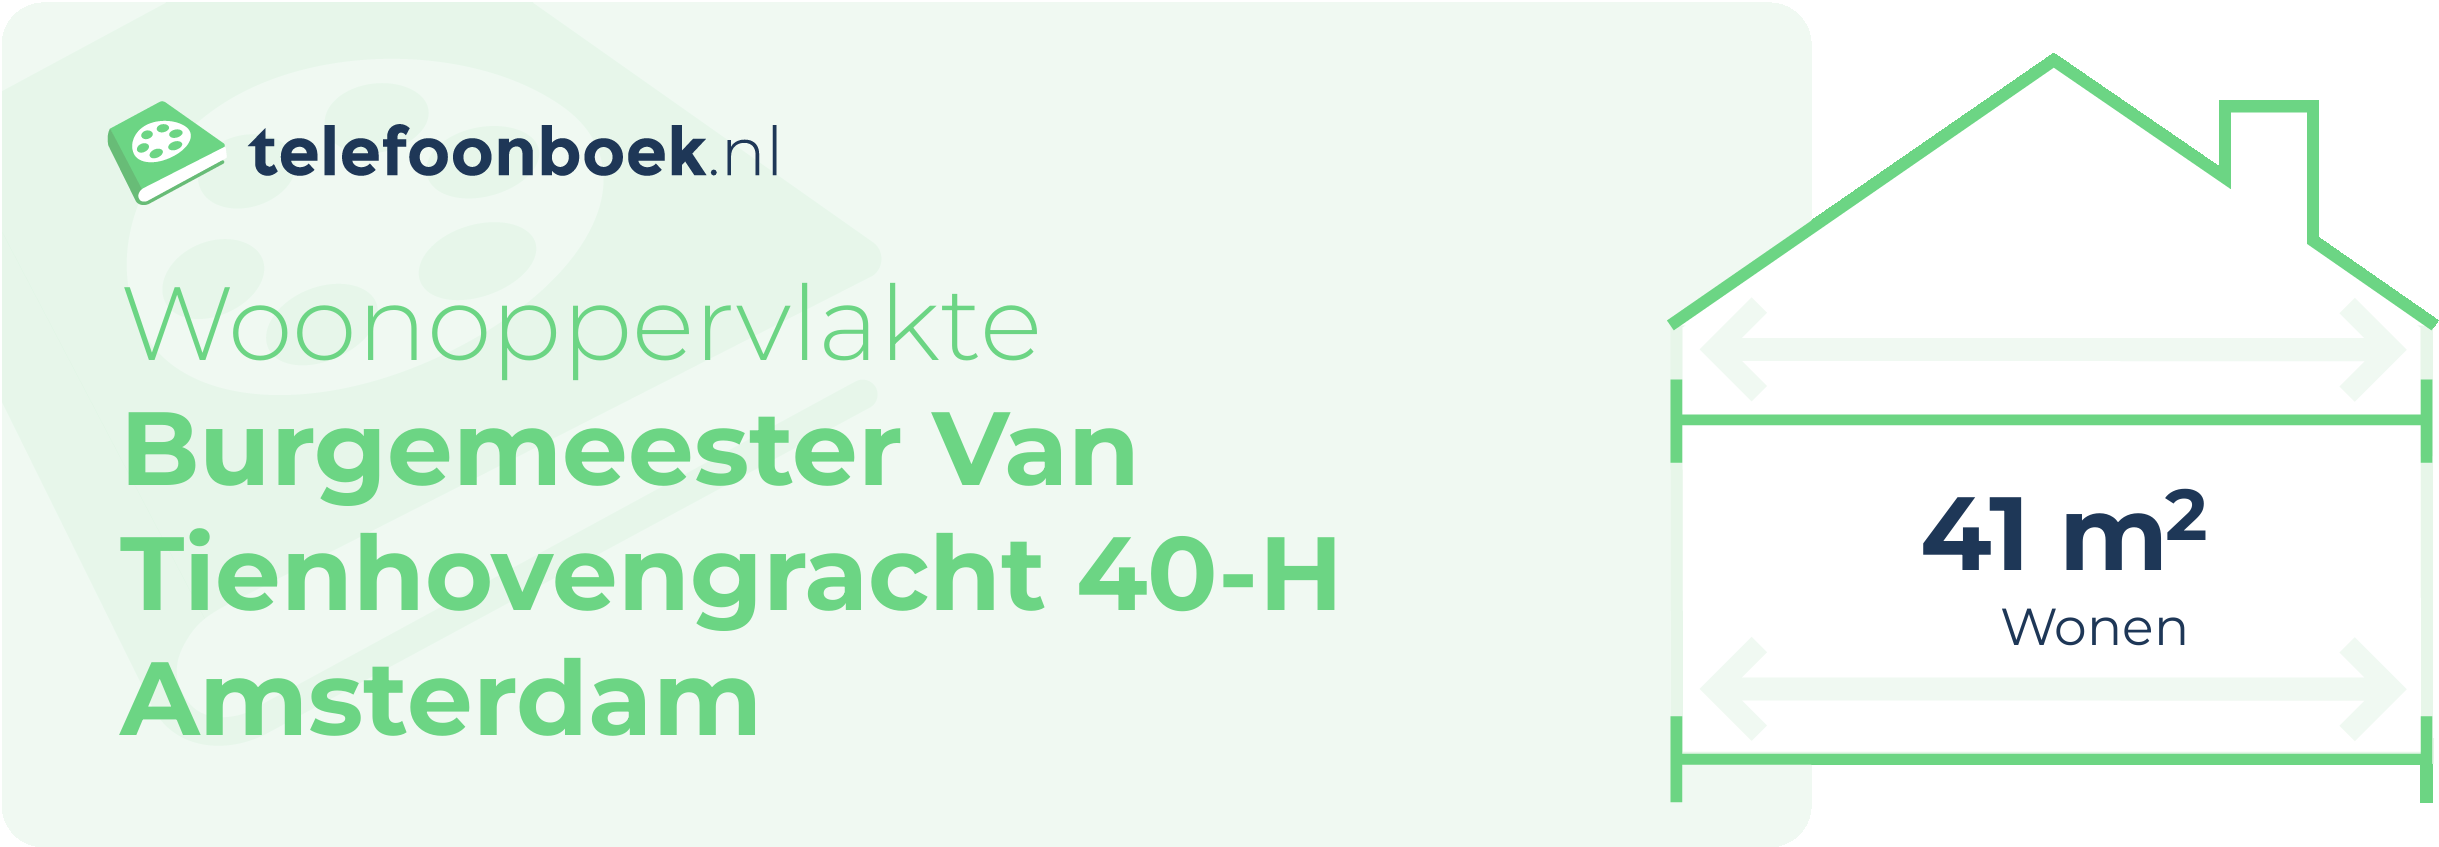 Woonoppervlakte Burgemeester Van Tienhovengracht 40-H Amsterdam